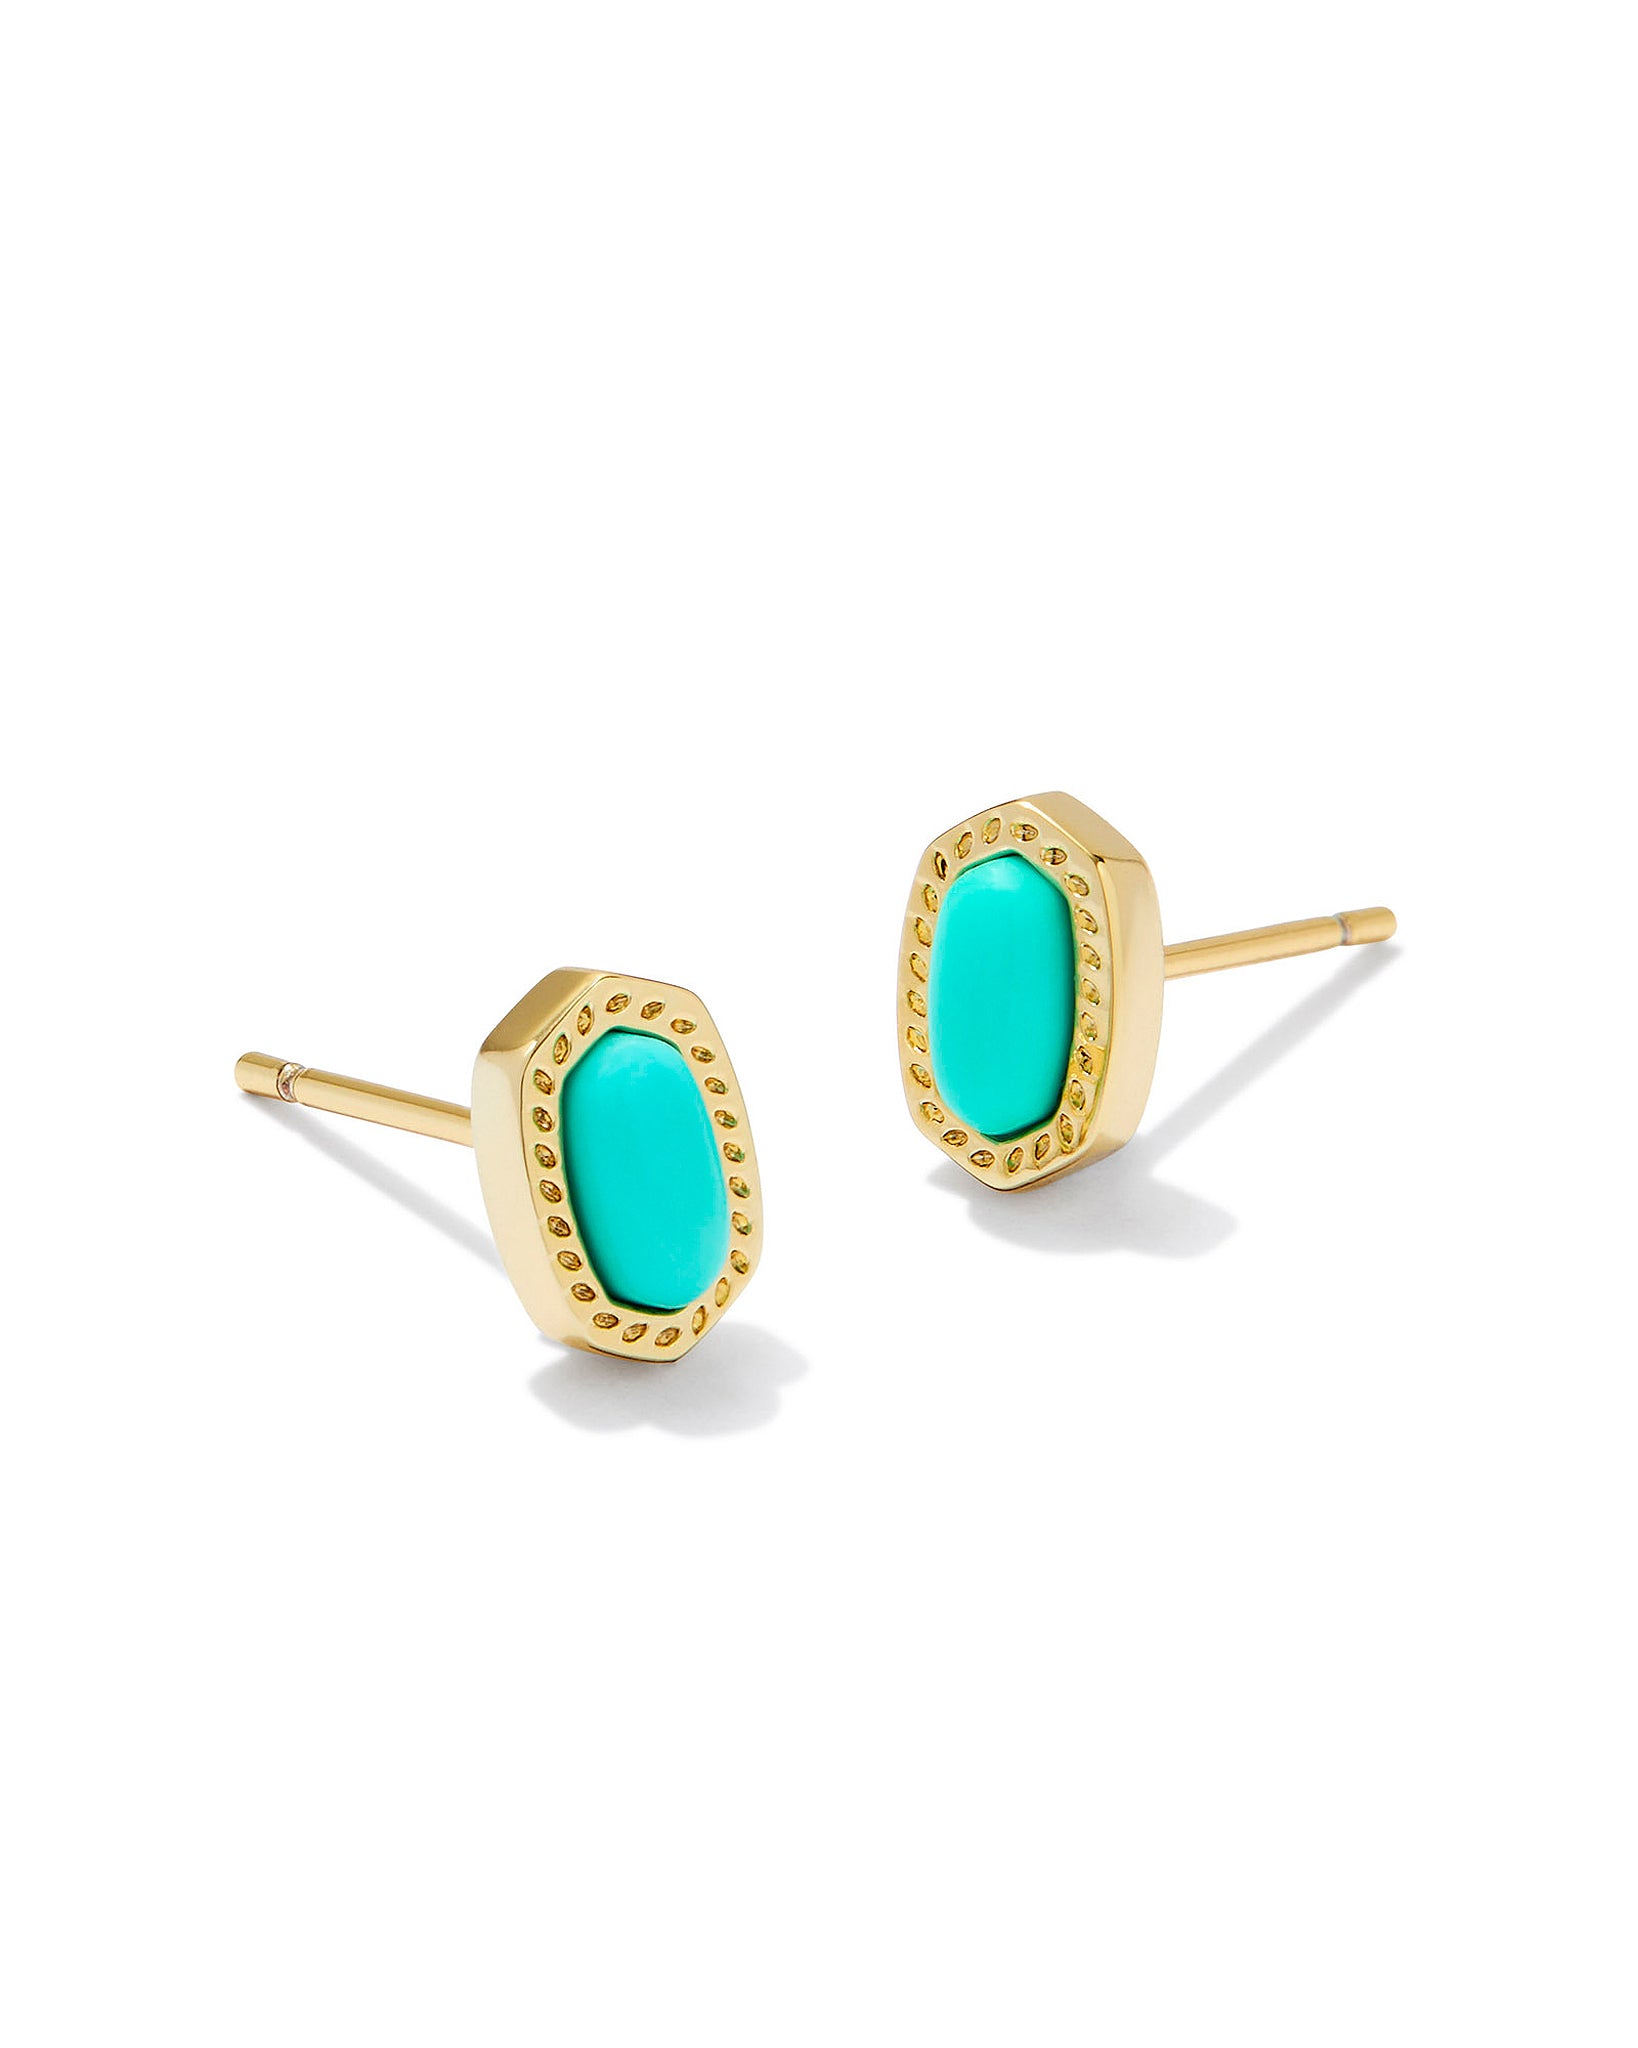 Kendra Scott Mini Ellie Petite Stud Earrings in Mint Green Magnesite and Gold